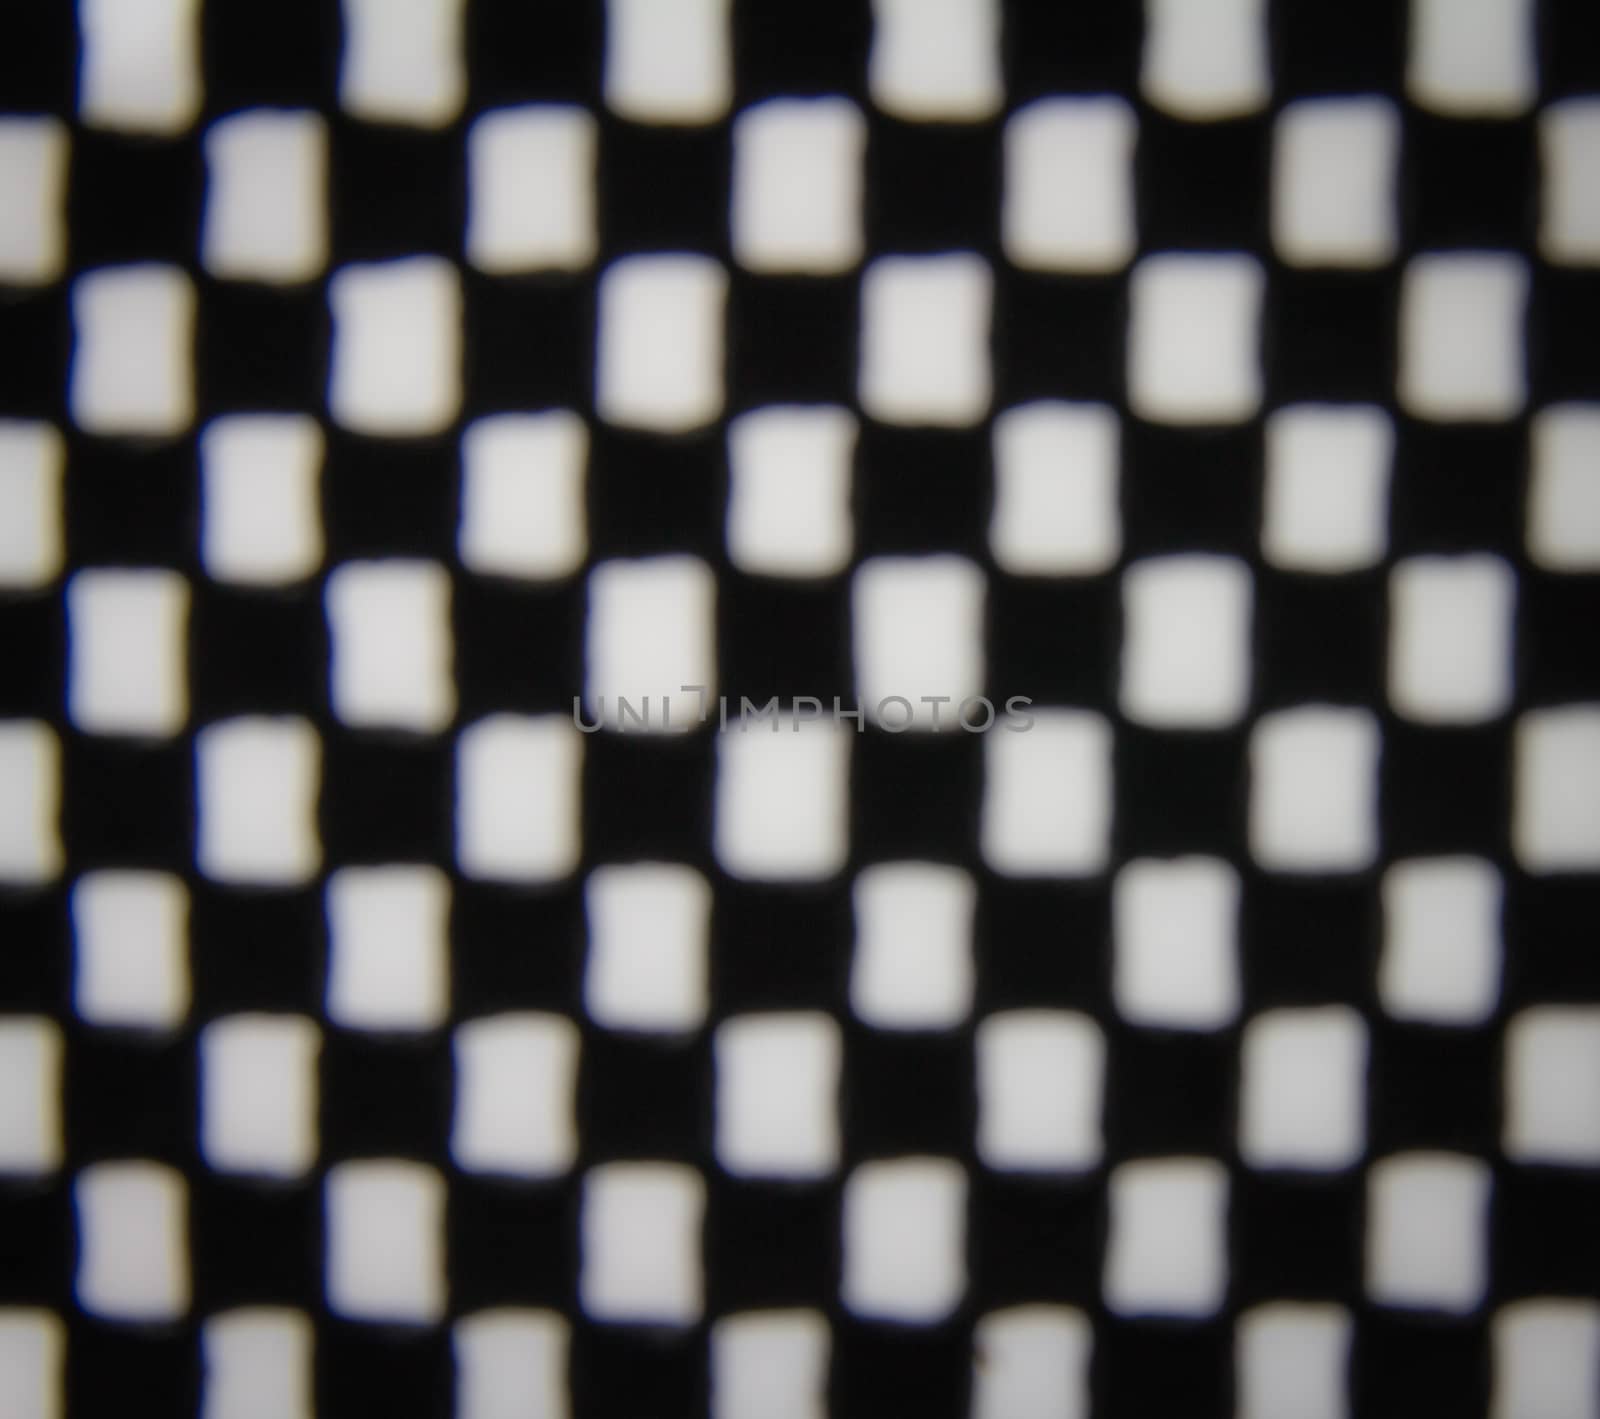 Blur focus Dark netting row like a Chess